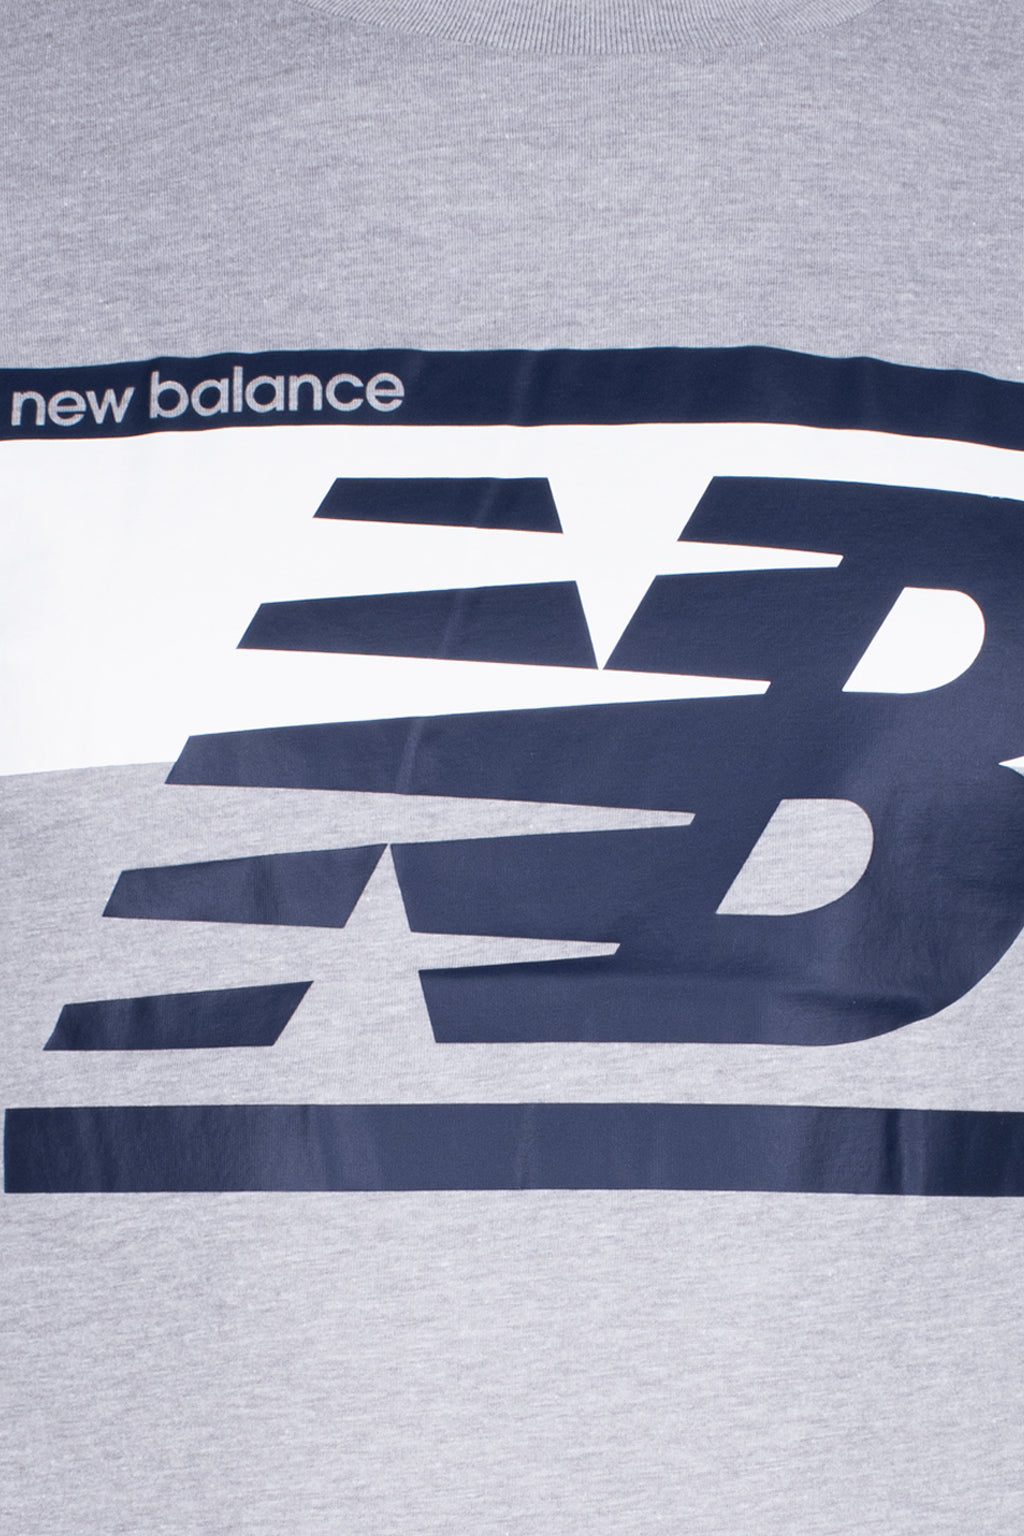 NEW BALANCE - Split T-Shirt